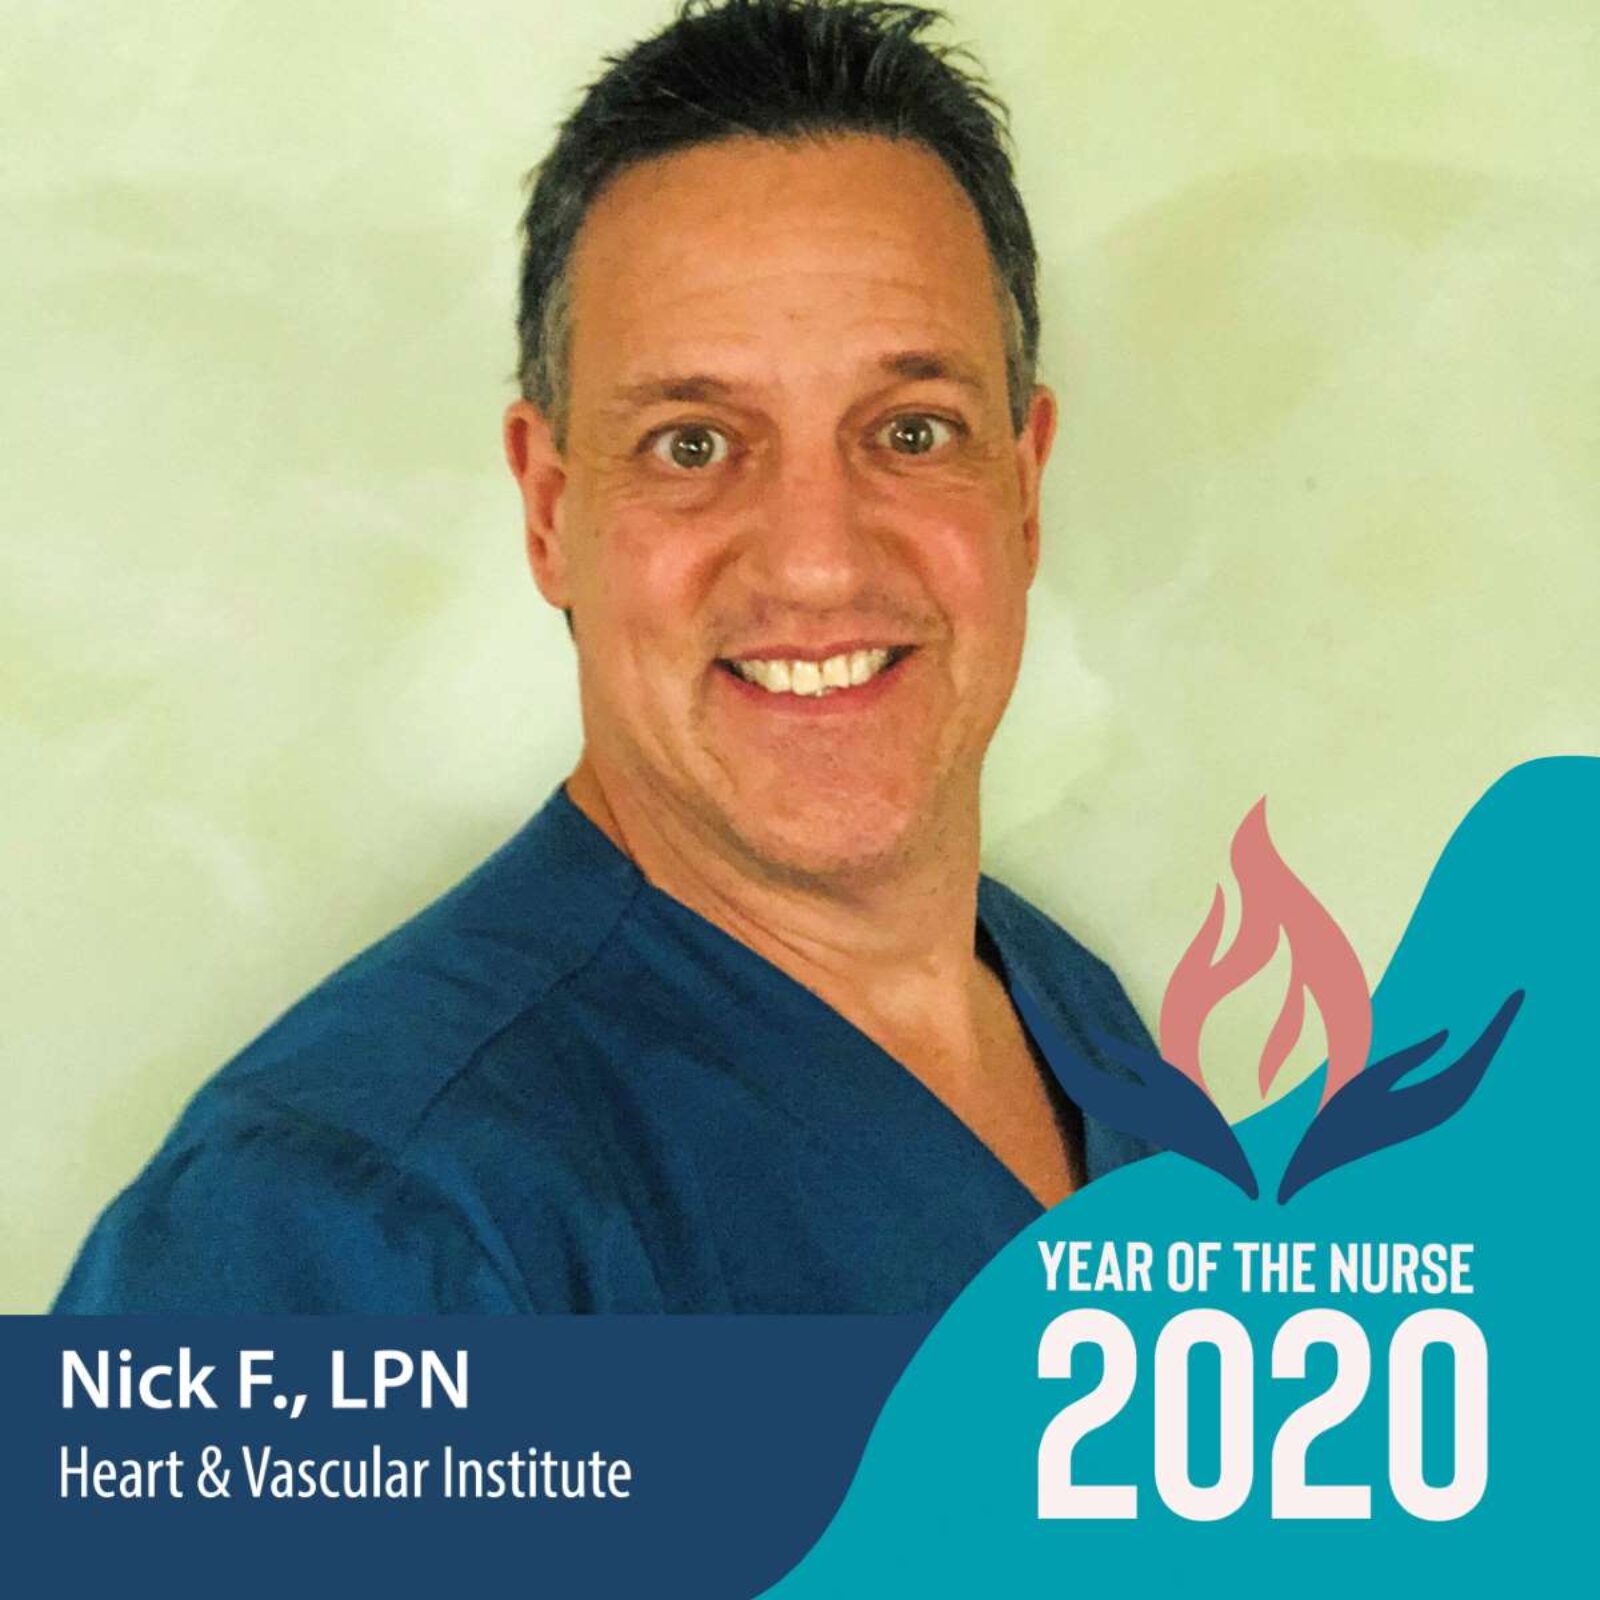 Year of the Nurse Nominee: Nick F., LPN